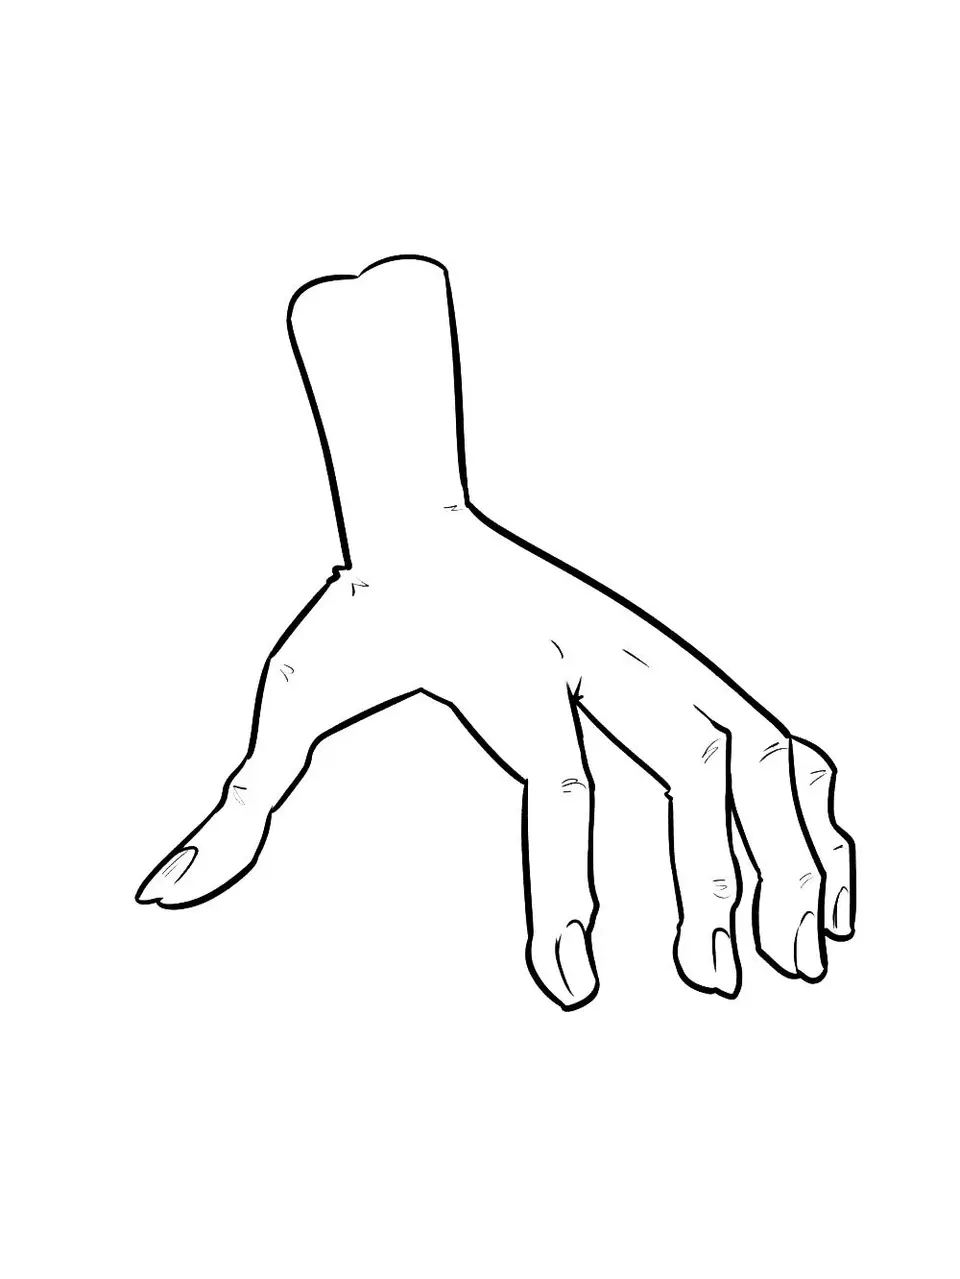 Рисунок руки